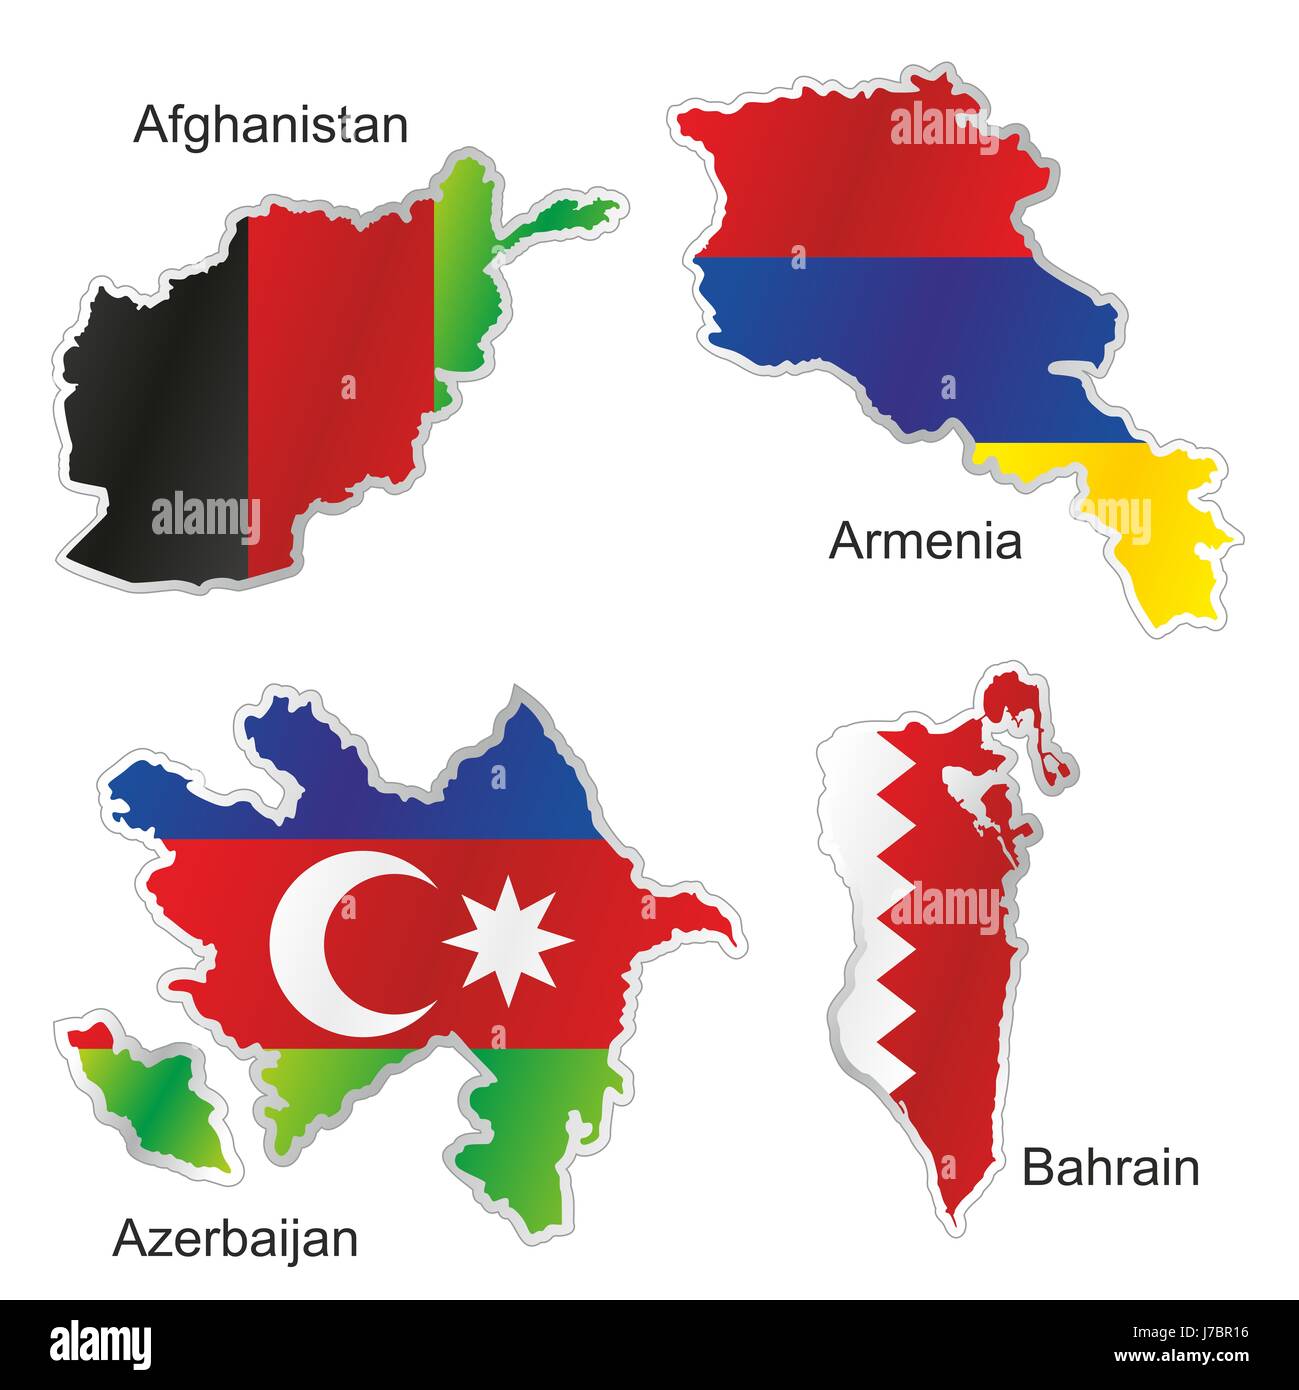 Asia bandiera Azerbaigian armenia afghanistan mappa atlas mappa del mondo isolato Foto Stock